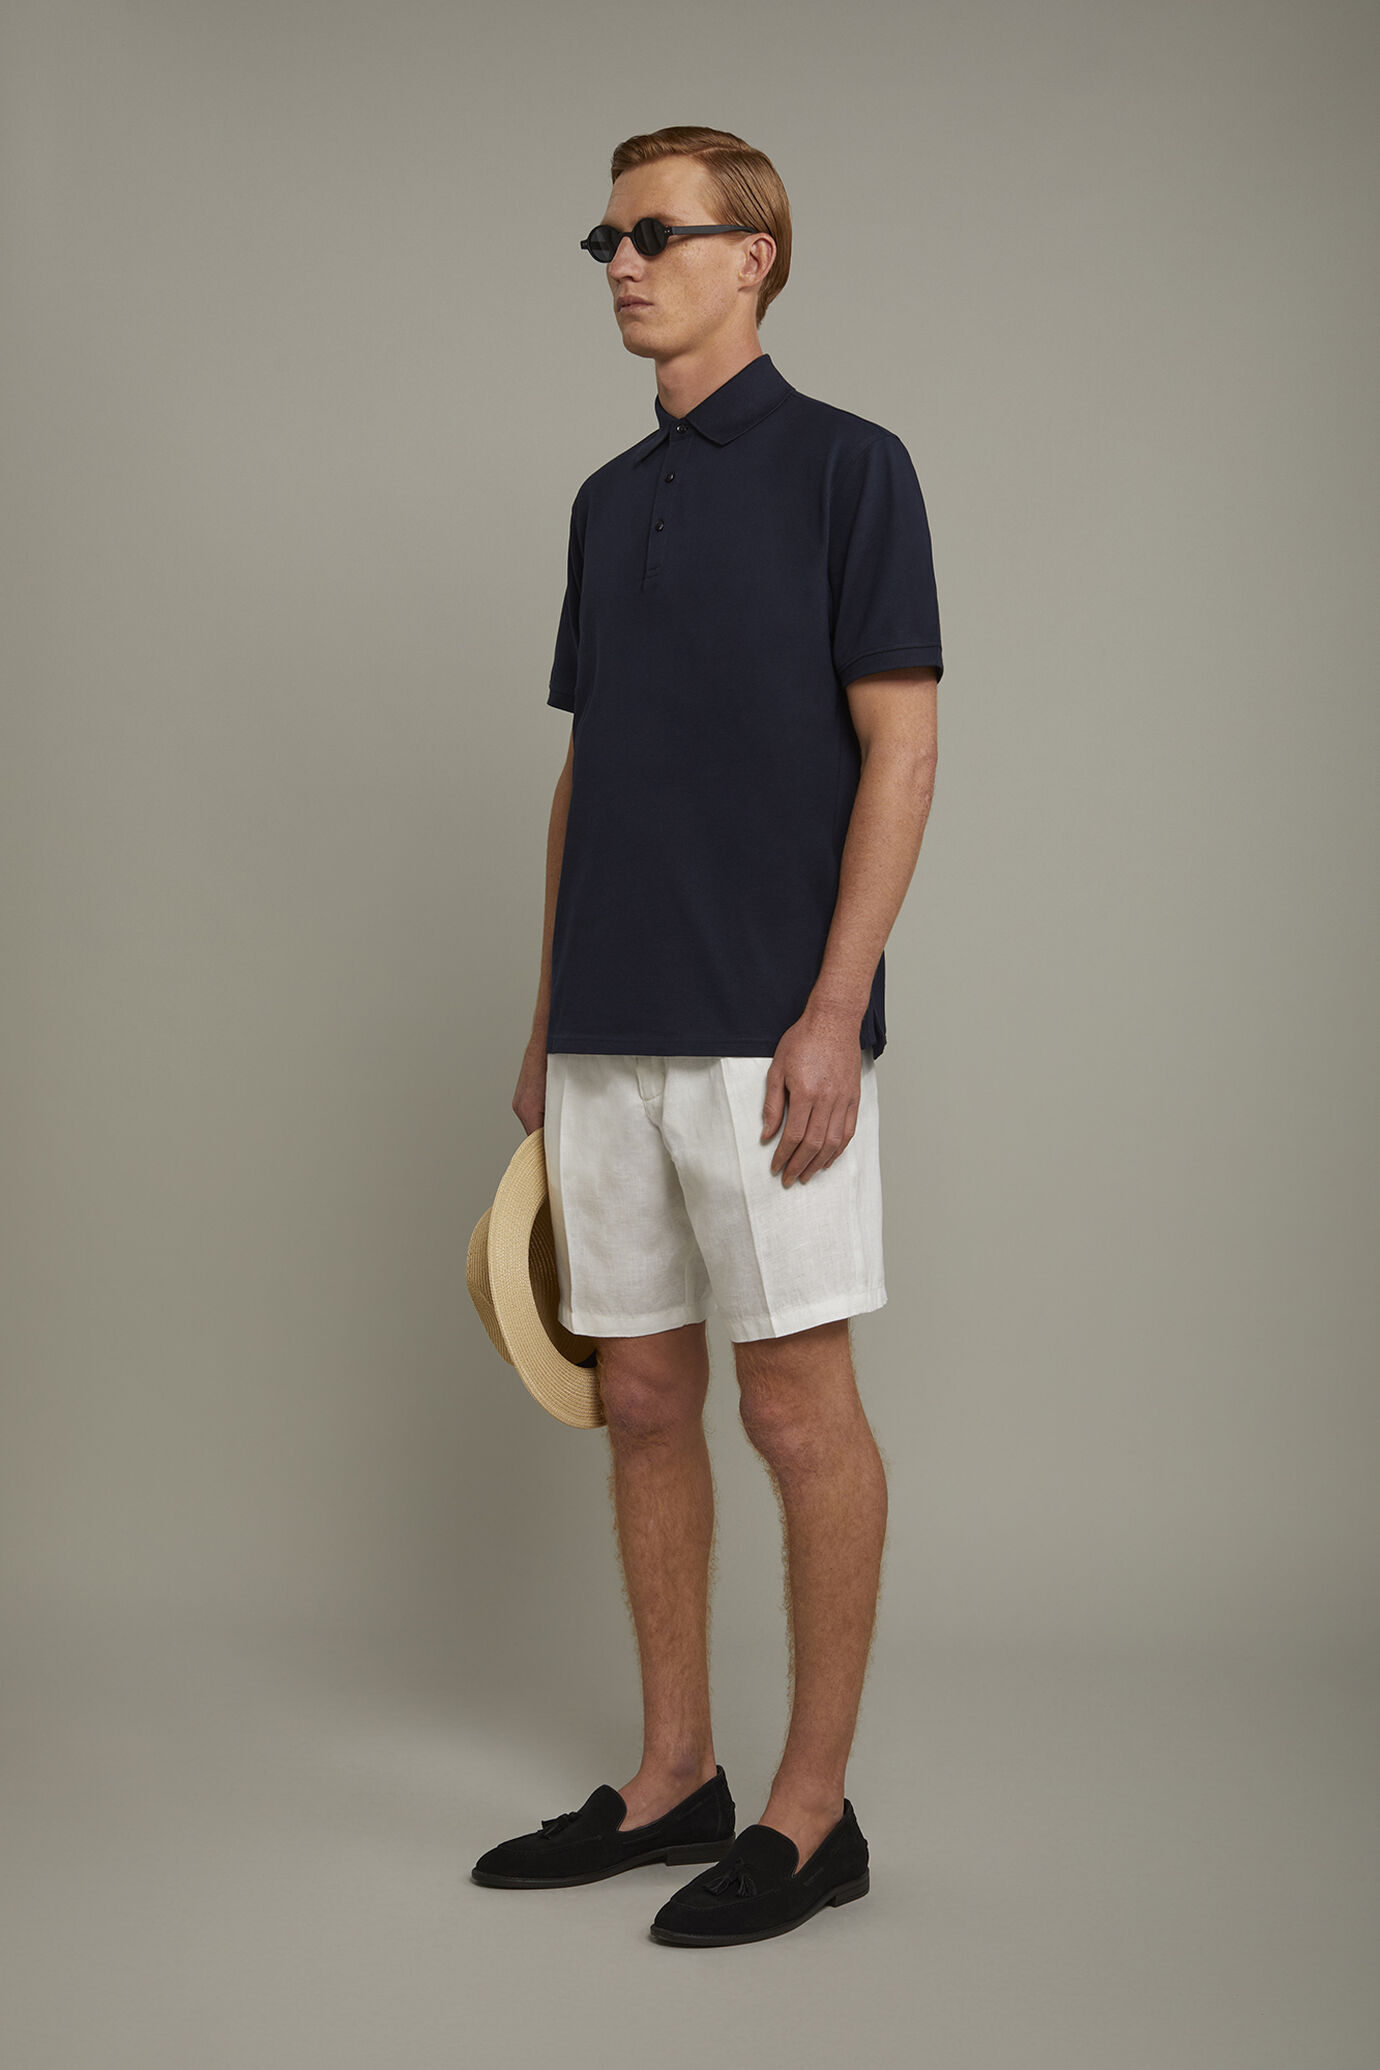 Kurzärmeliges Herren-Poloshirt aus 100 % Baumwolle in normaler Passform image number 1